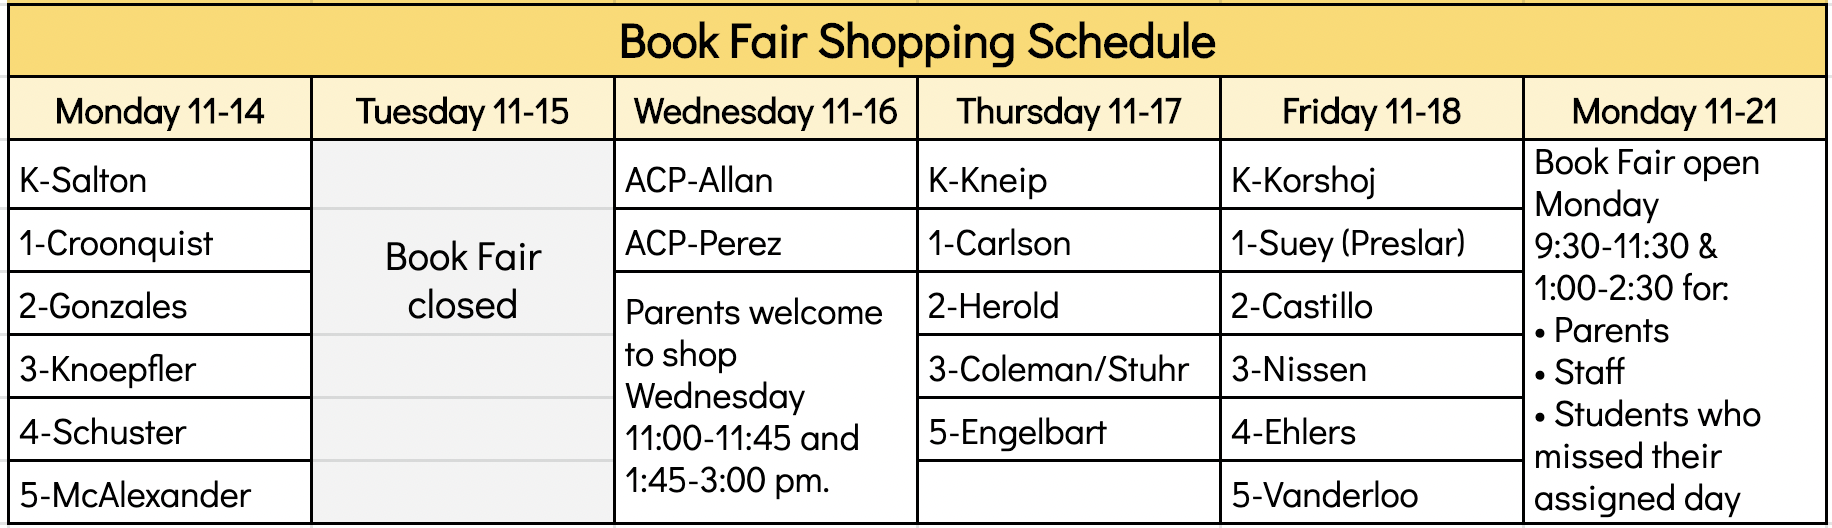 Book Fair shopping schedule